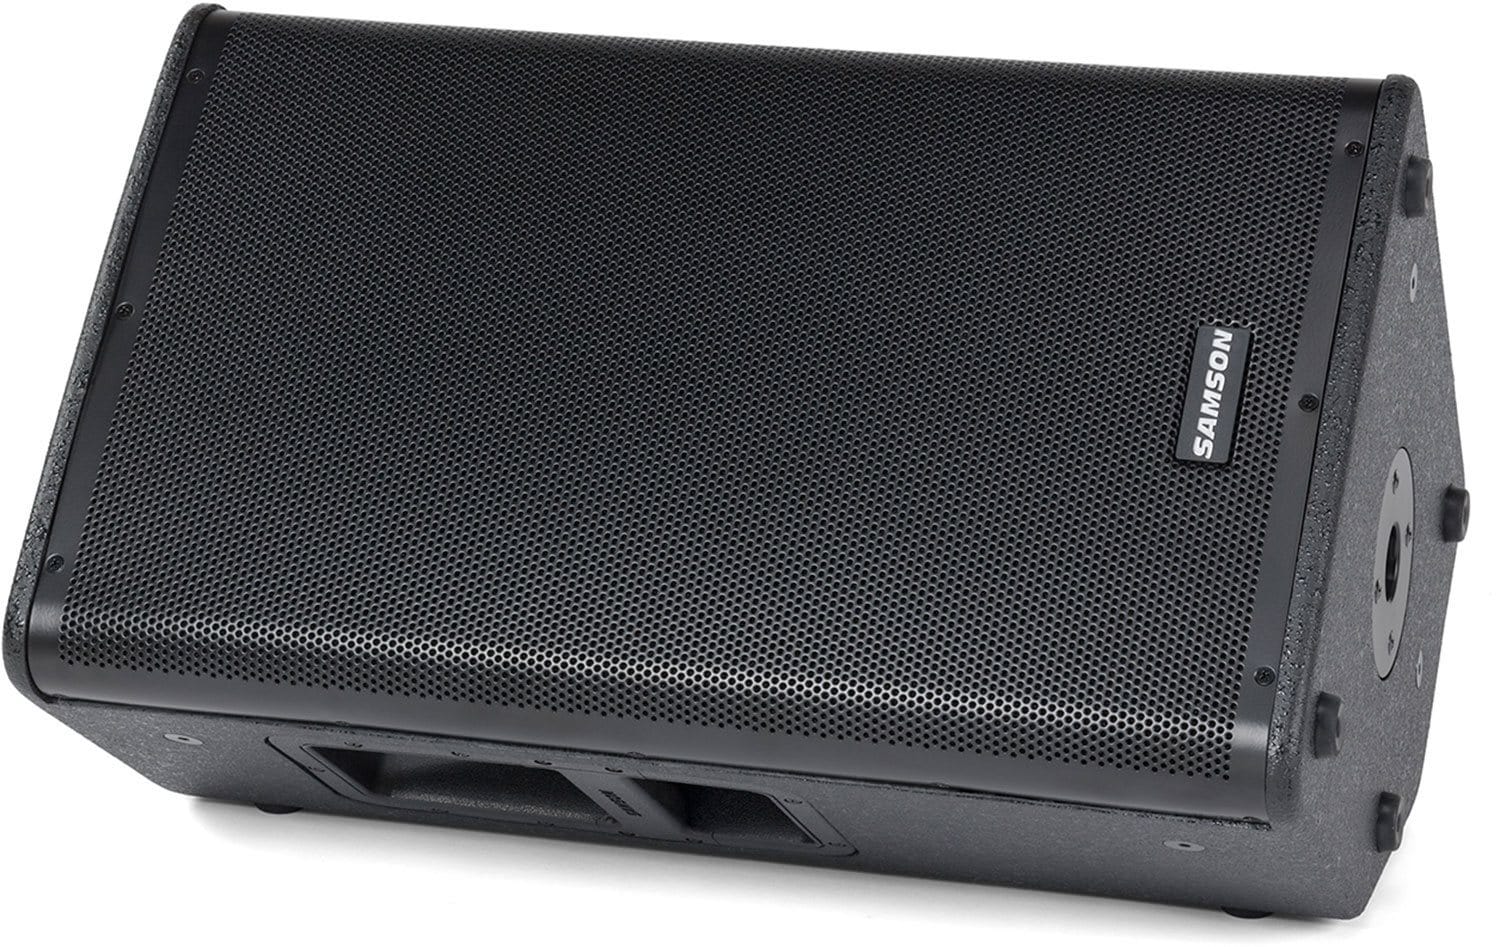 Samson RSX112A 12-inch 1600W 2-Way Powered Speaker - PSSL ProSound and Stage Lighting